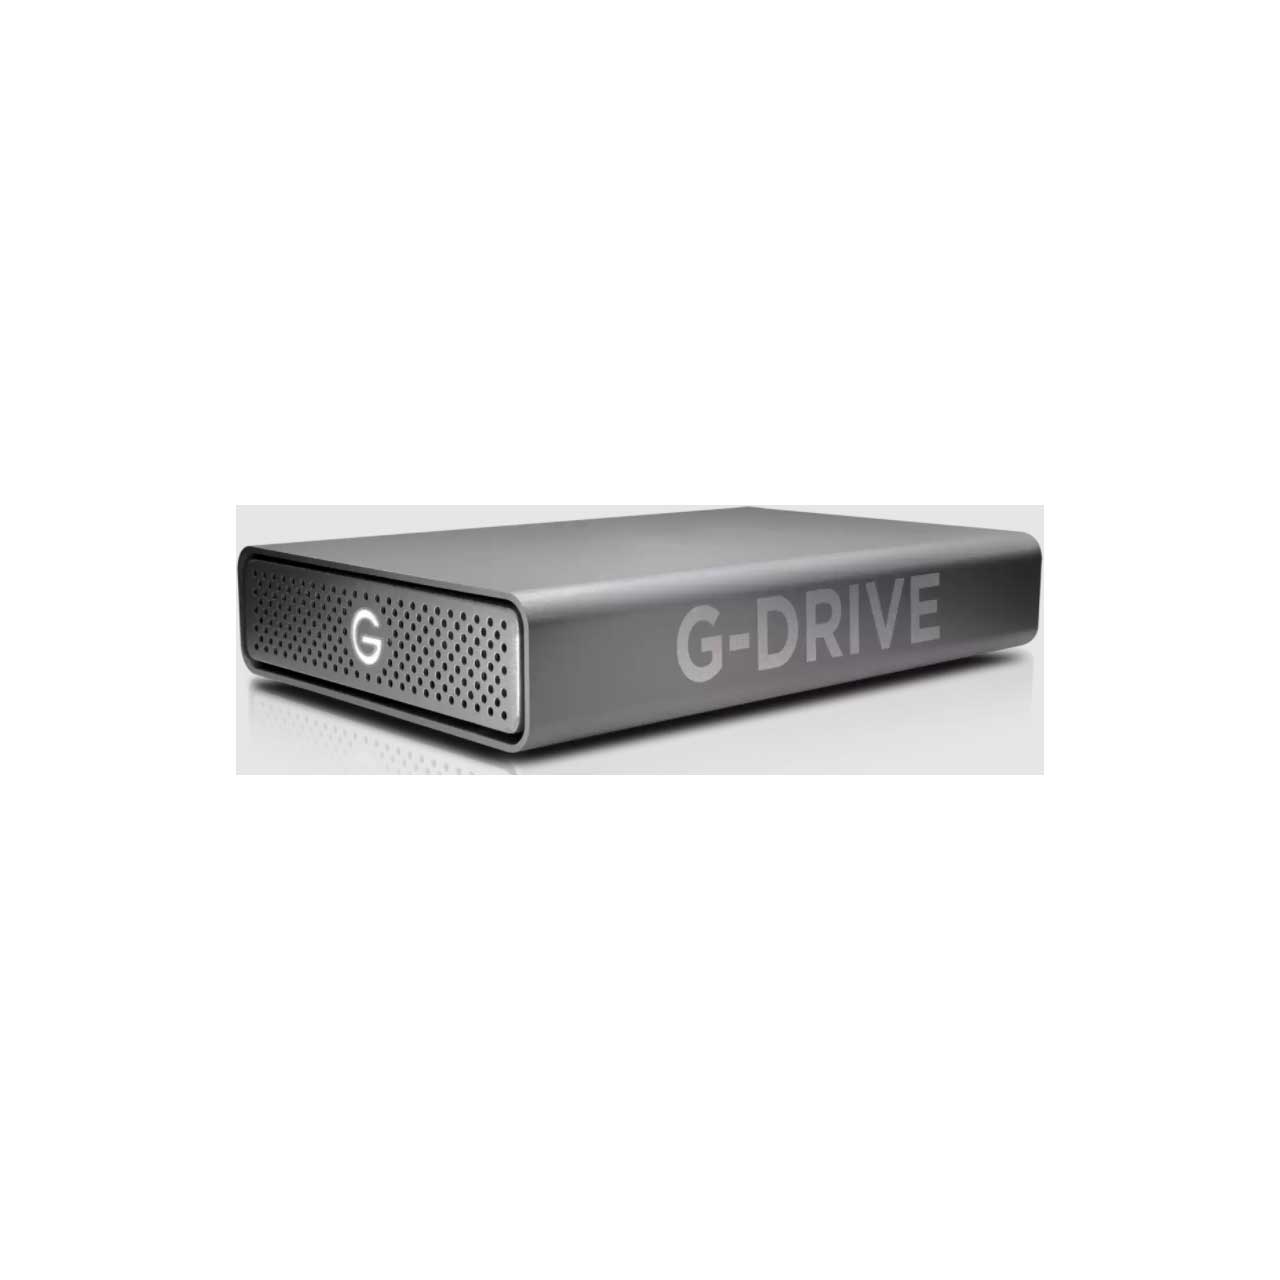 SanDisk Professional 6TB G-DRIVE Enterprise-Class USB 3.2 Gen 1 External Hard Drive G-DRIVE 6TB